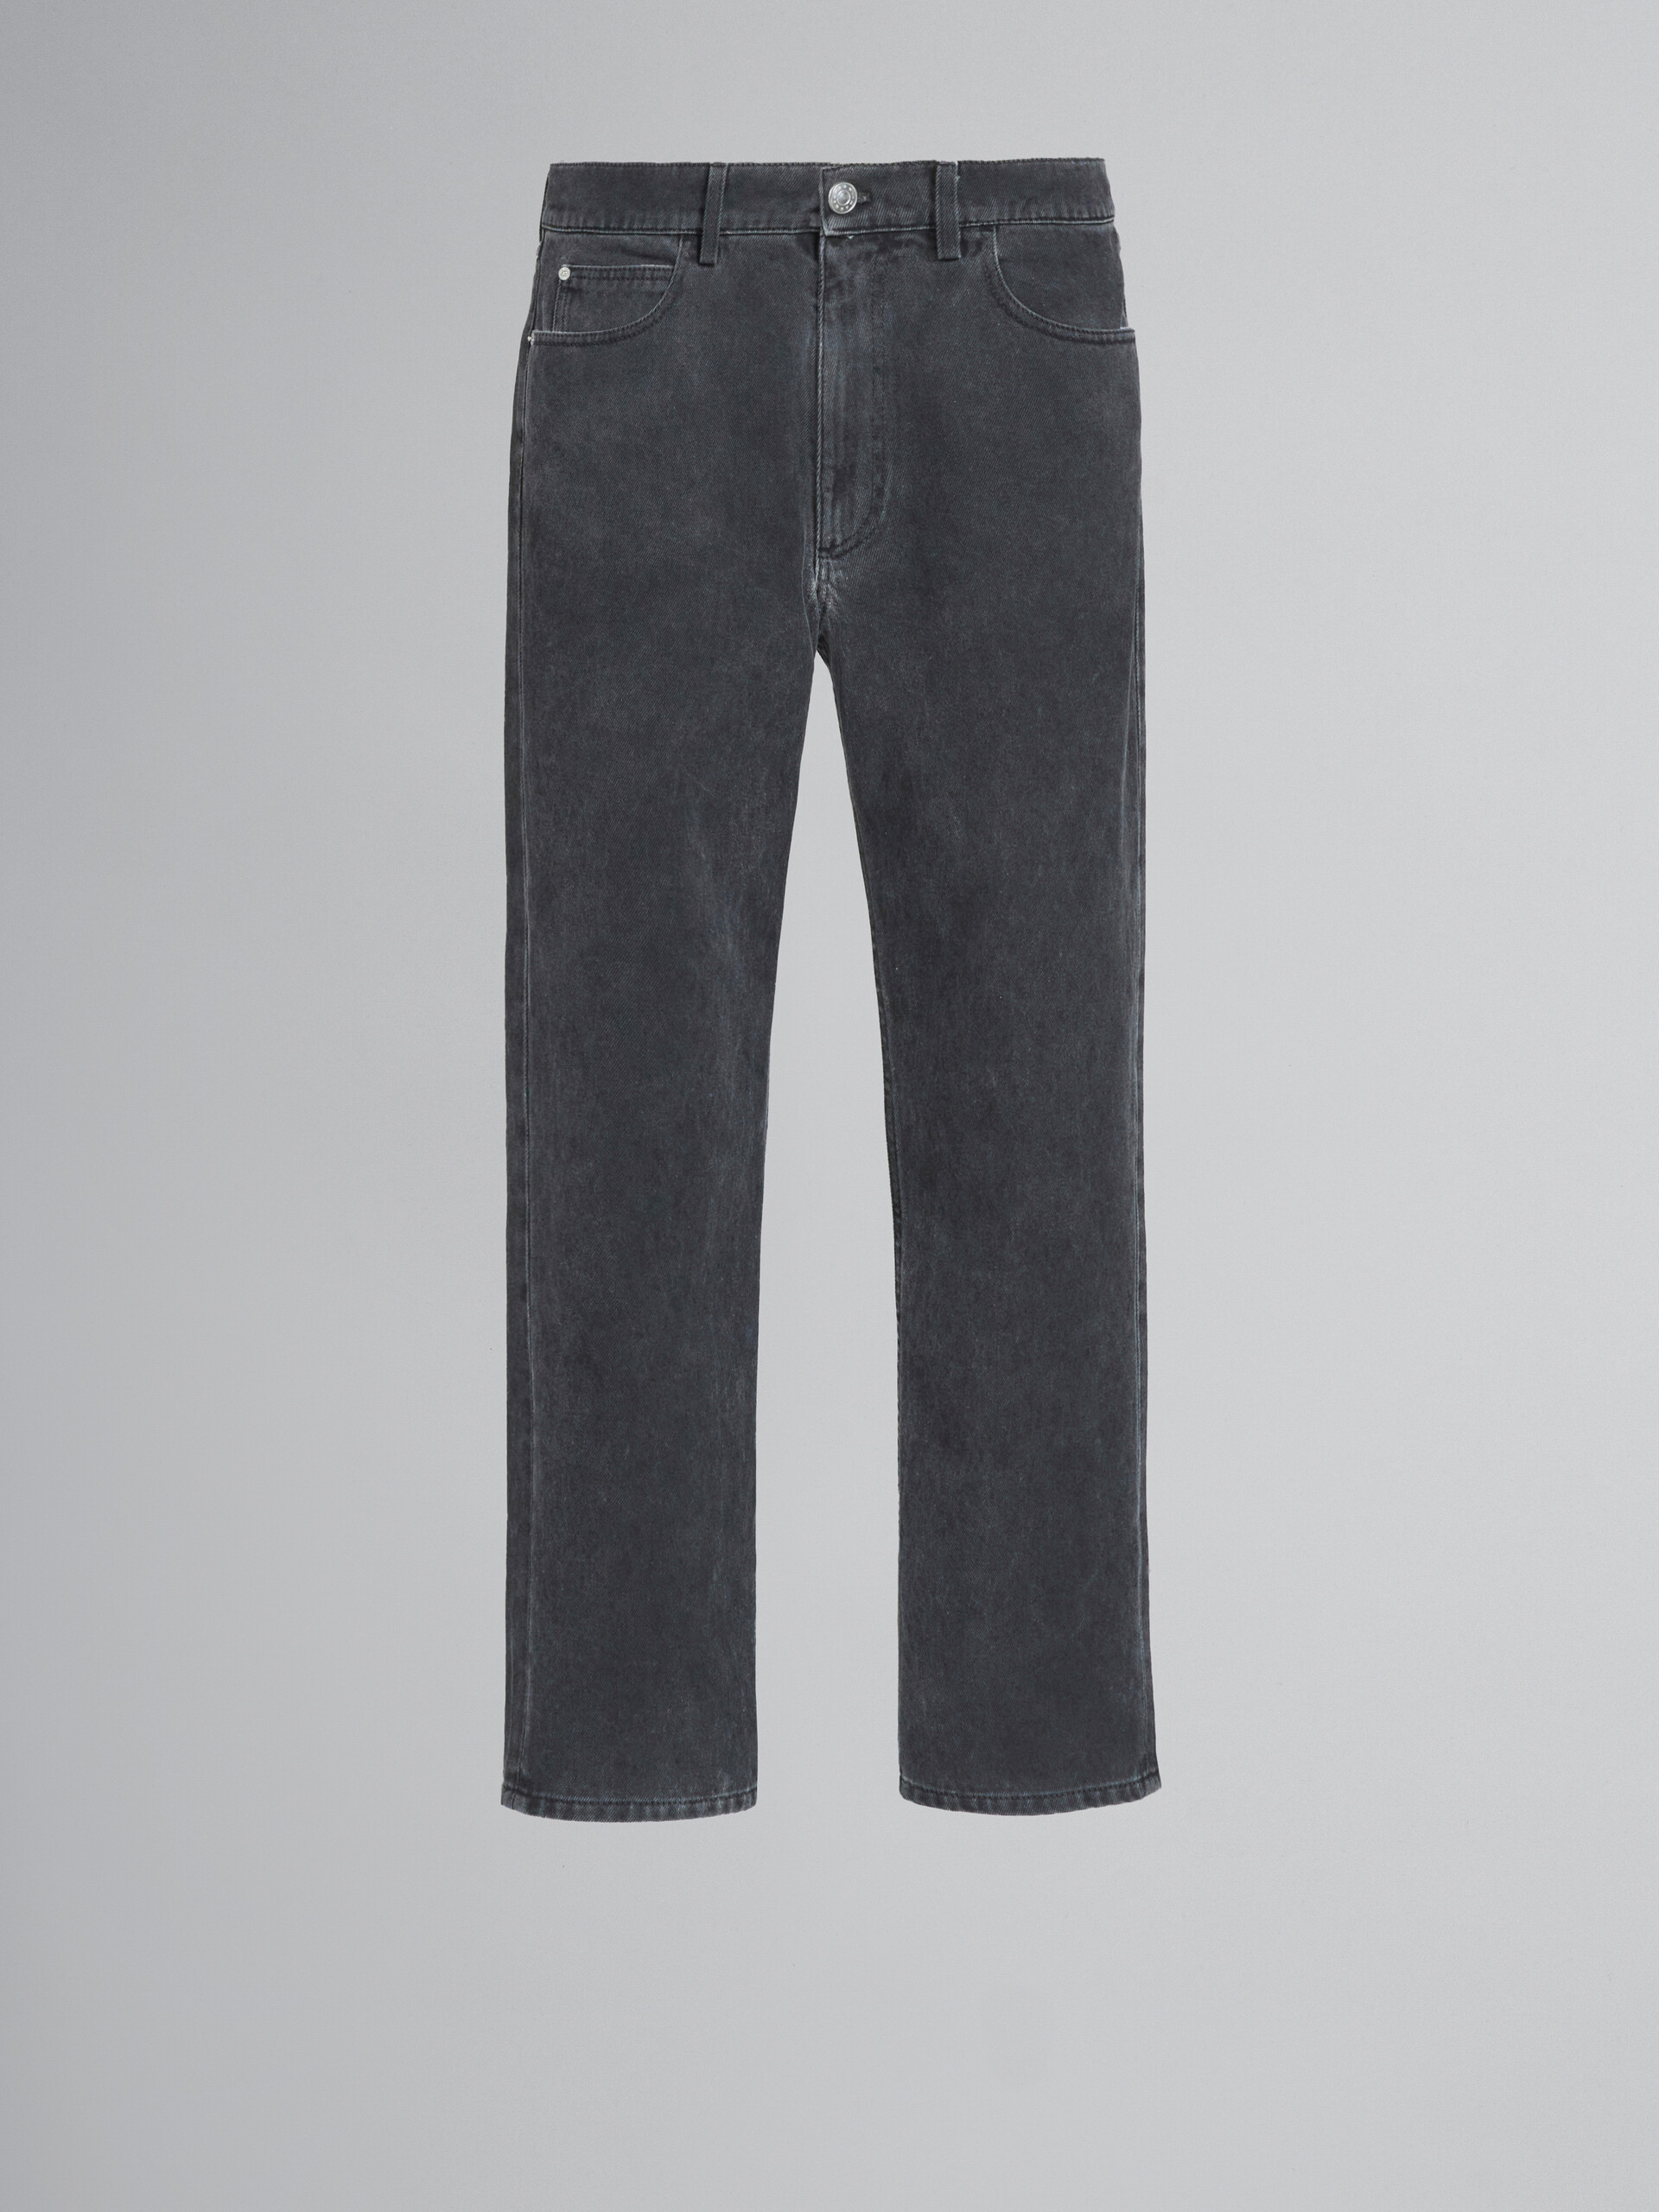 Grey denim pants - Pants - Image 1